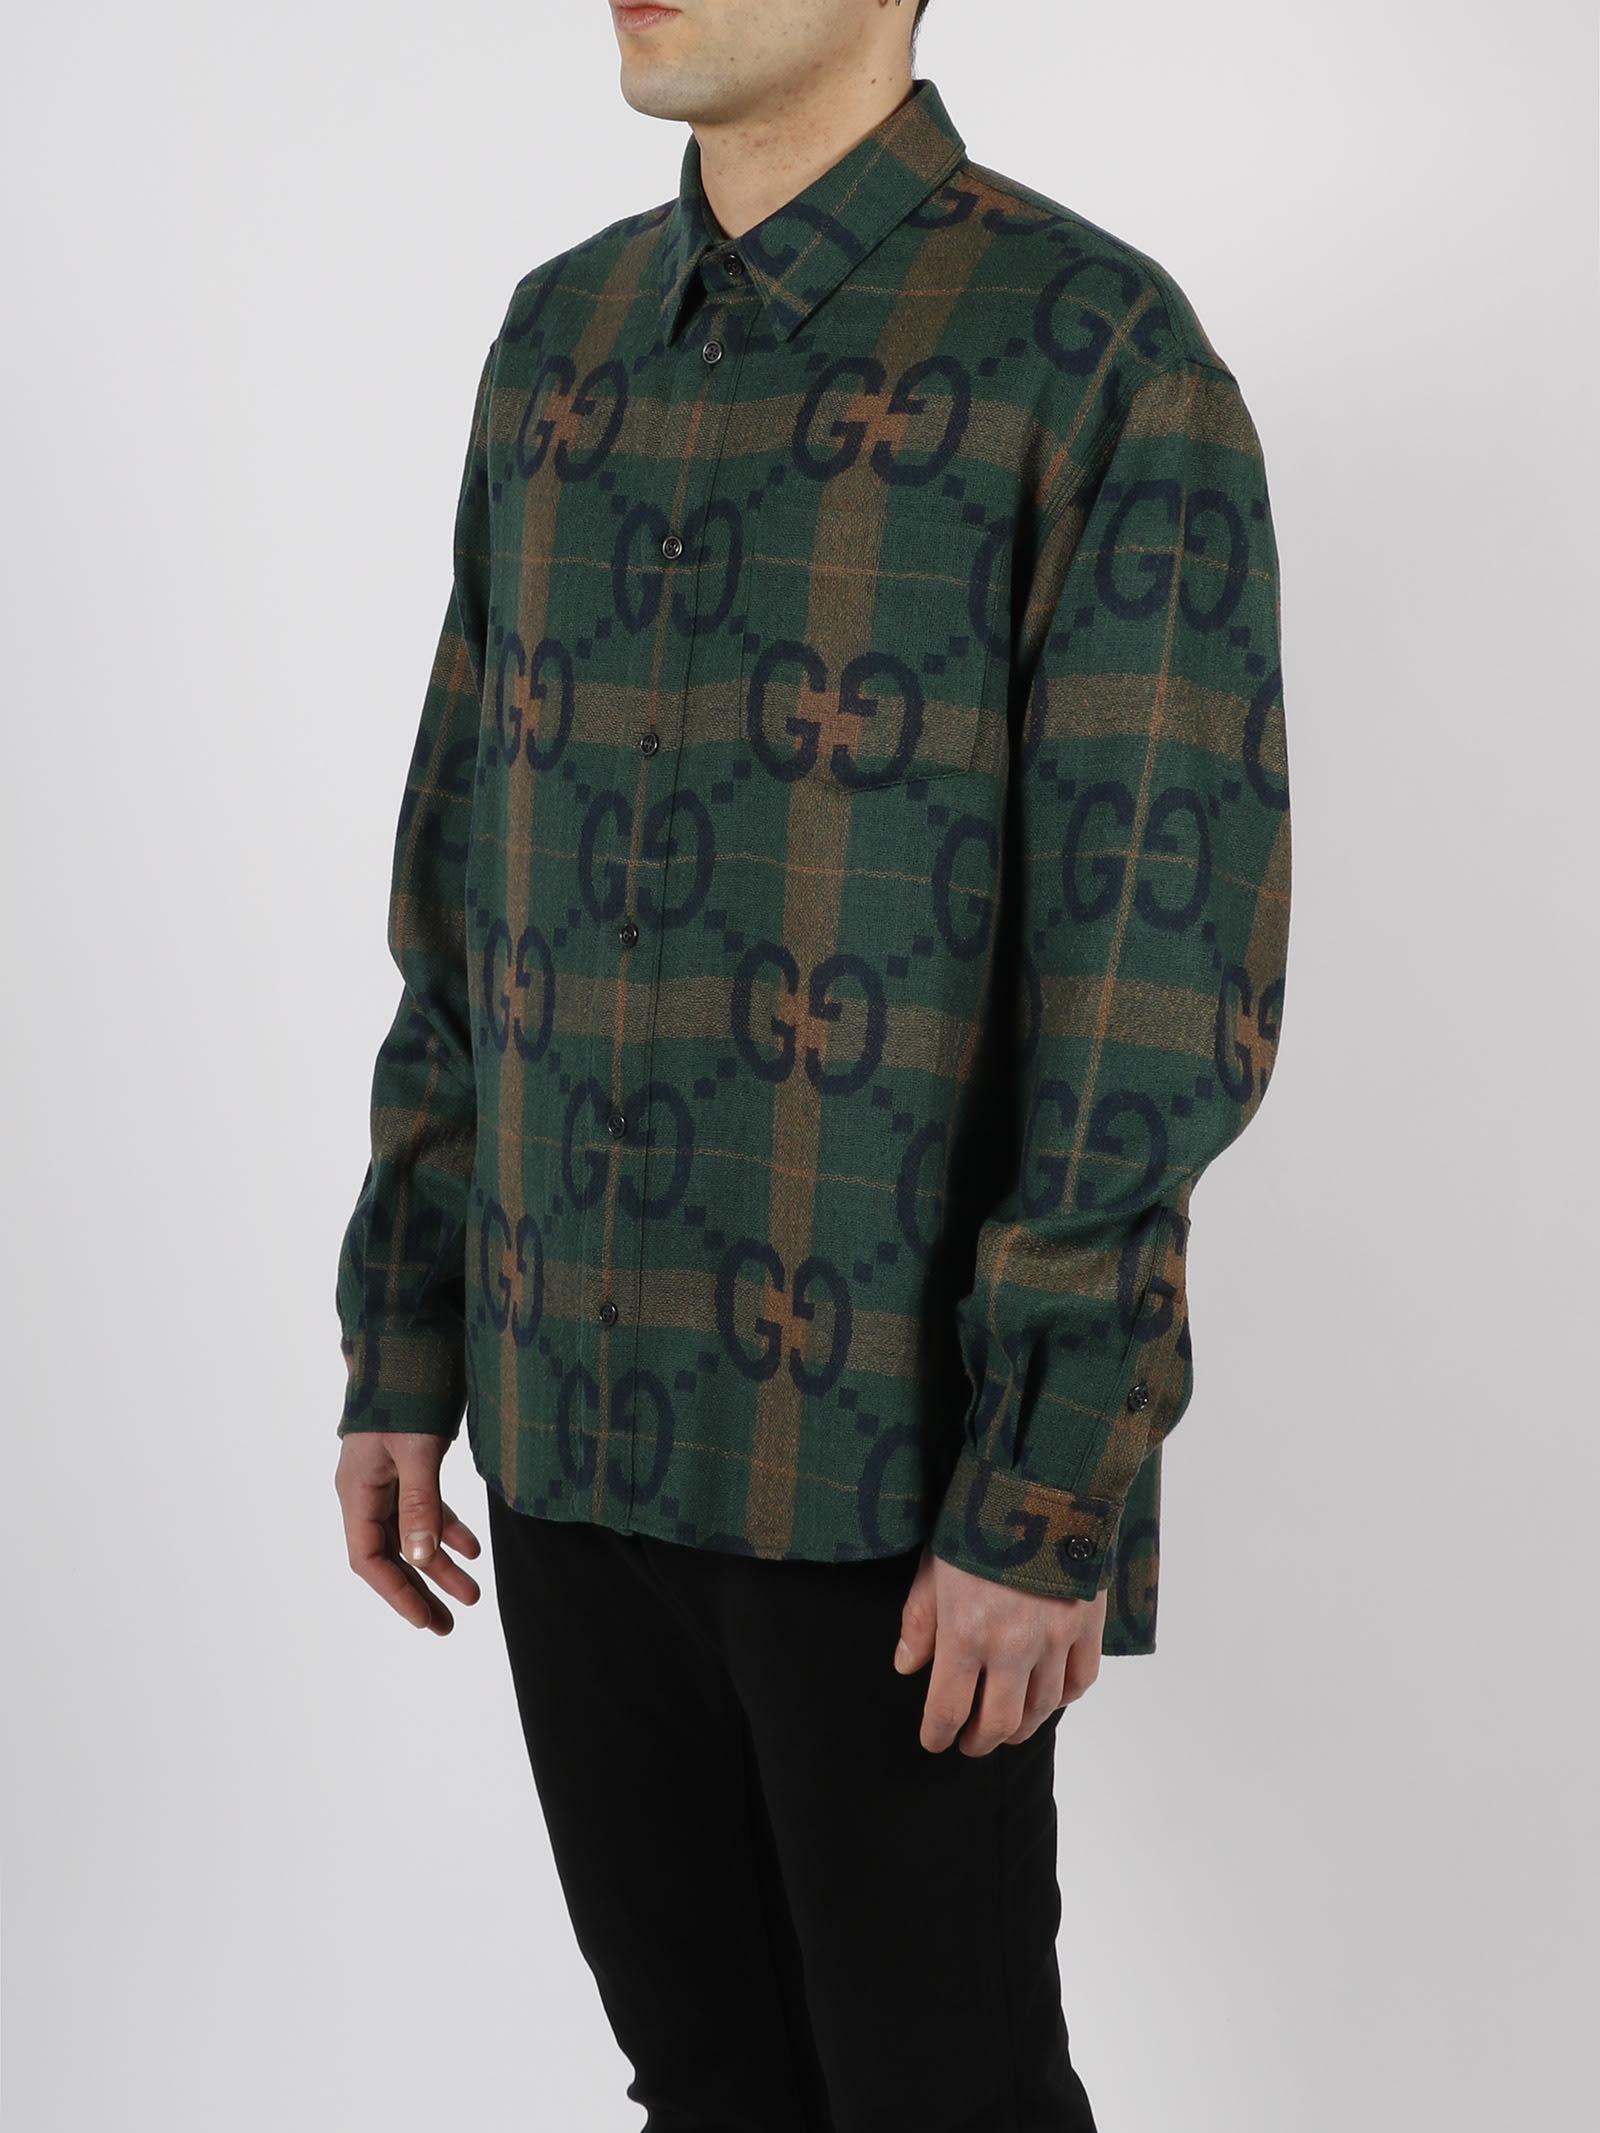 Gucci Maxi GG-print Wool Shirt - Brown